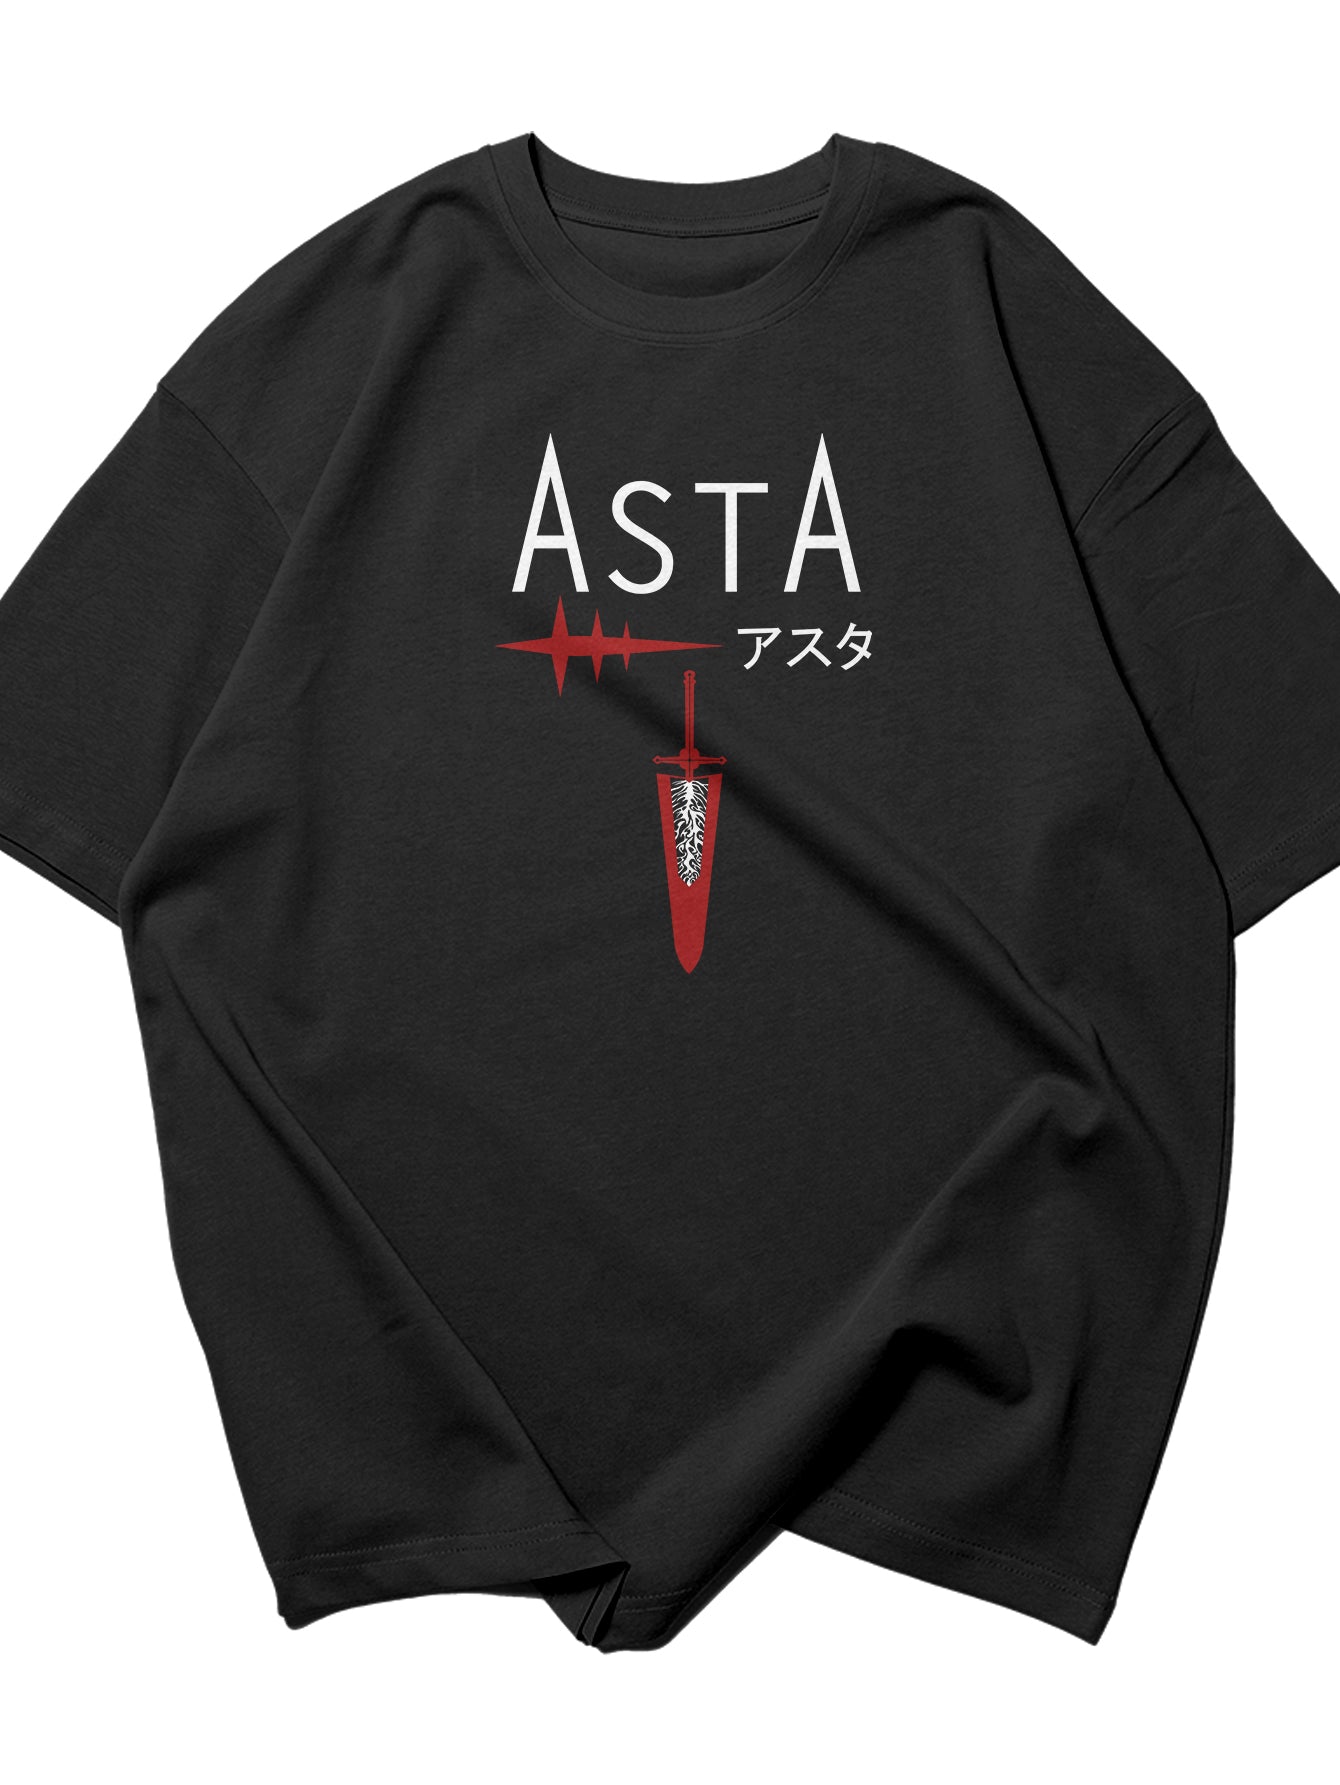 Asta Spirit Urban Fashion Oversize T-Shirt